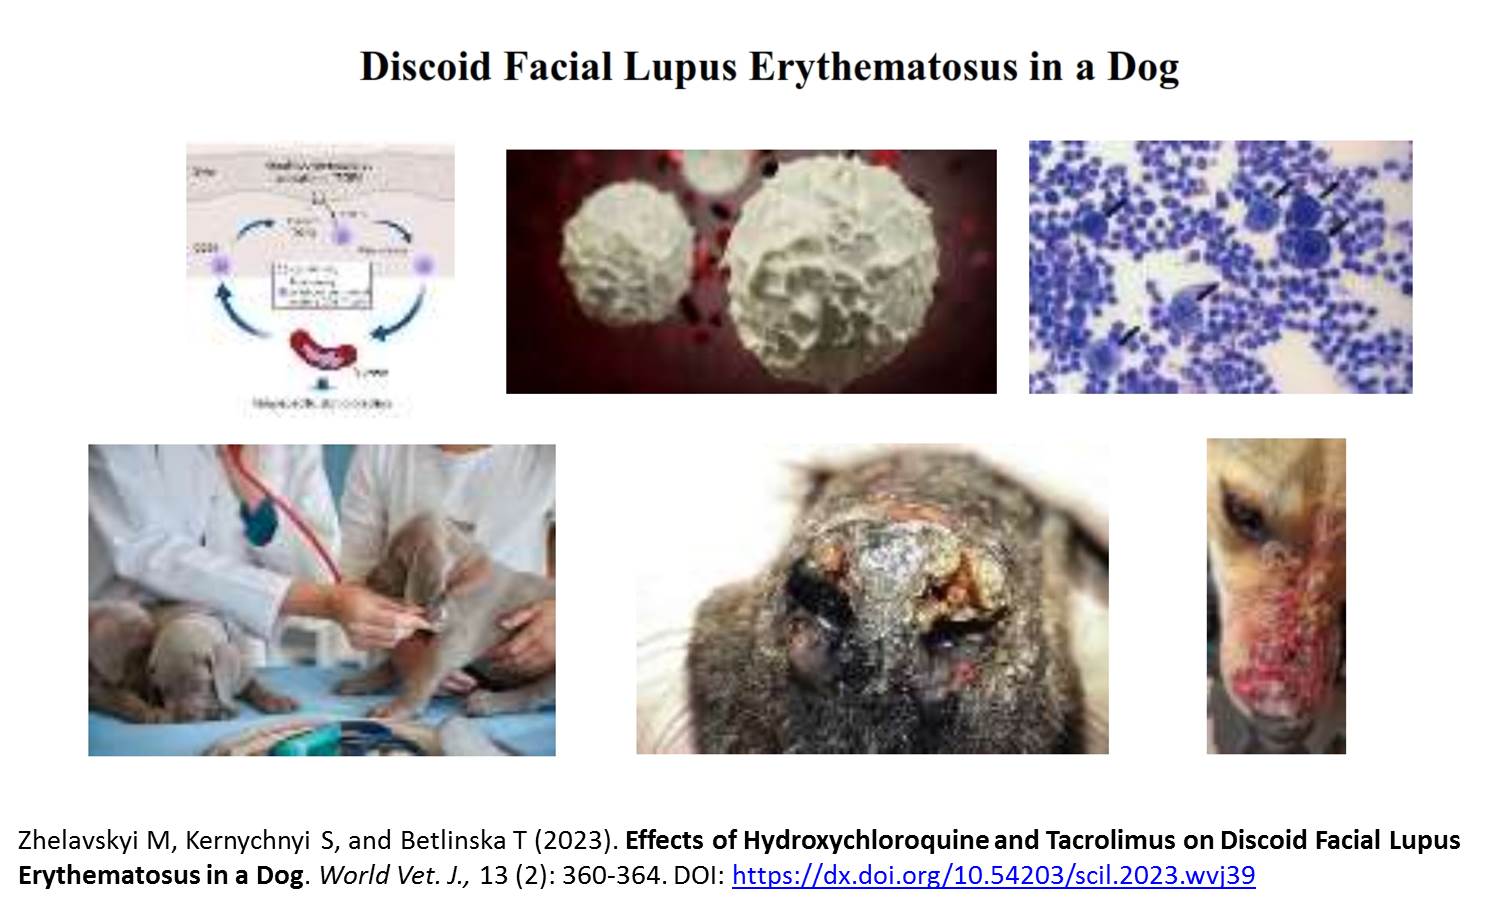 234-Discoid_Facial_Lupus_Erythematosus_in_a_Dog